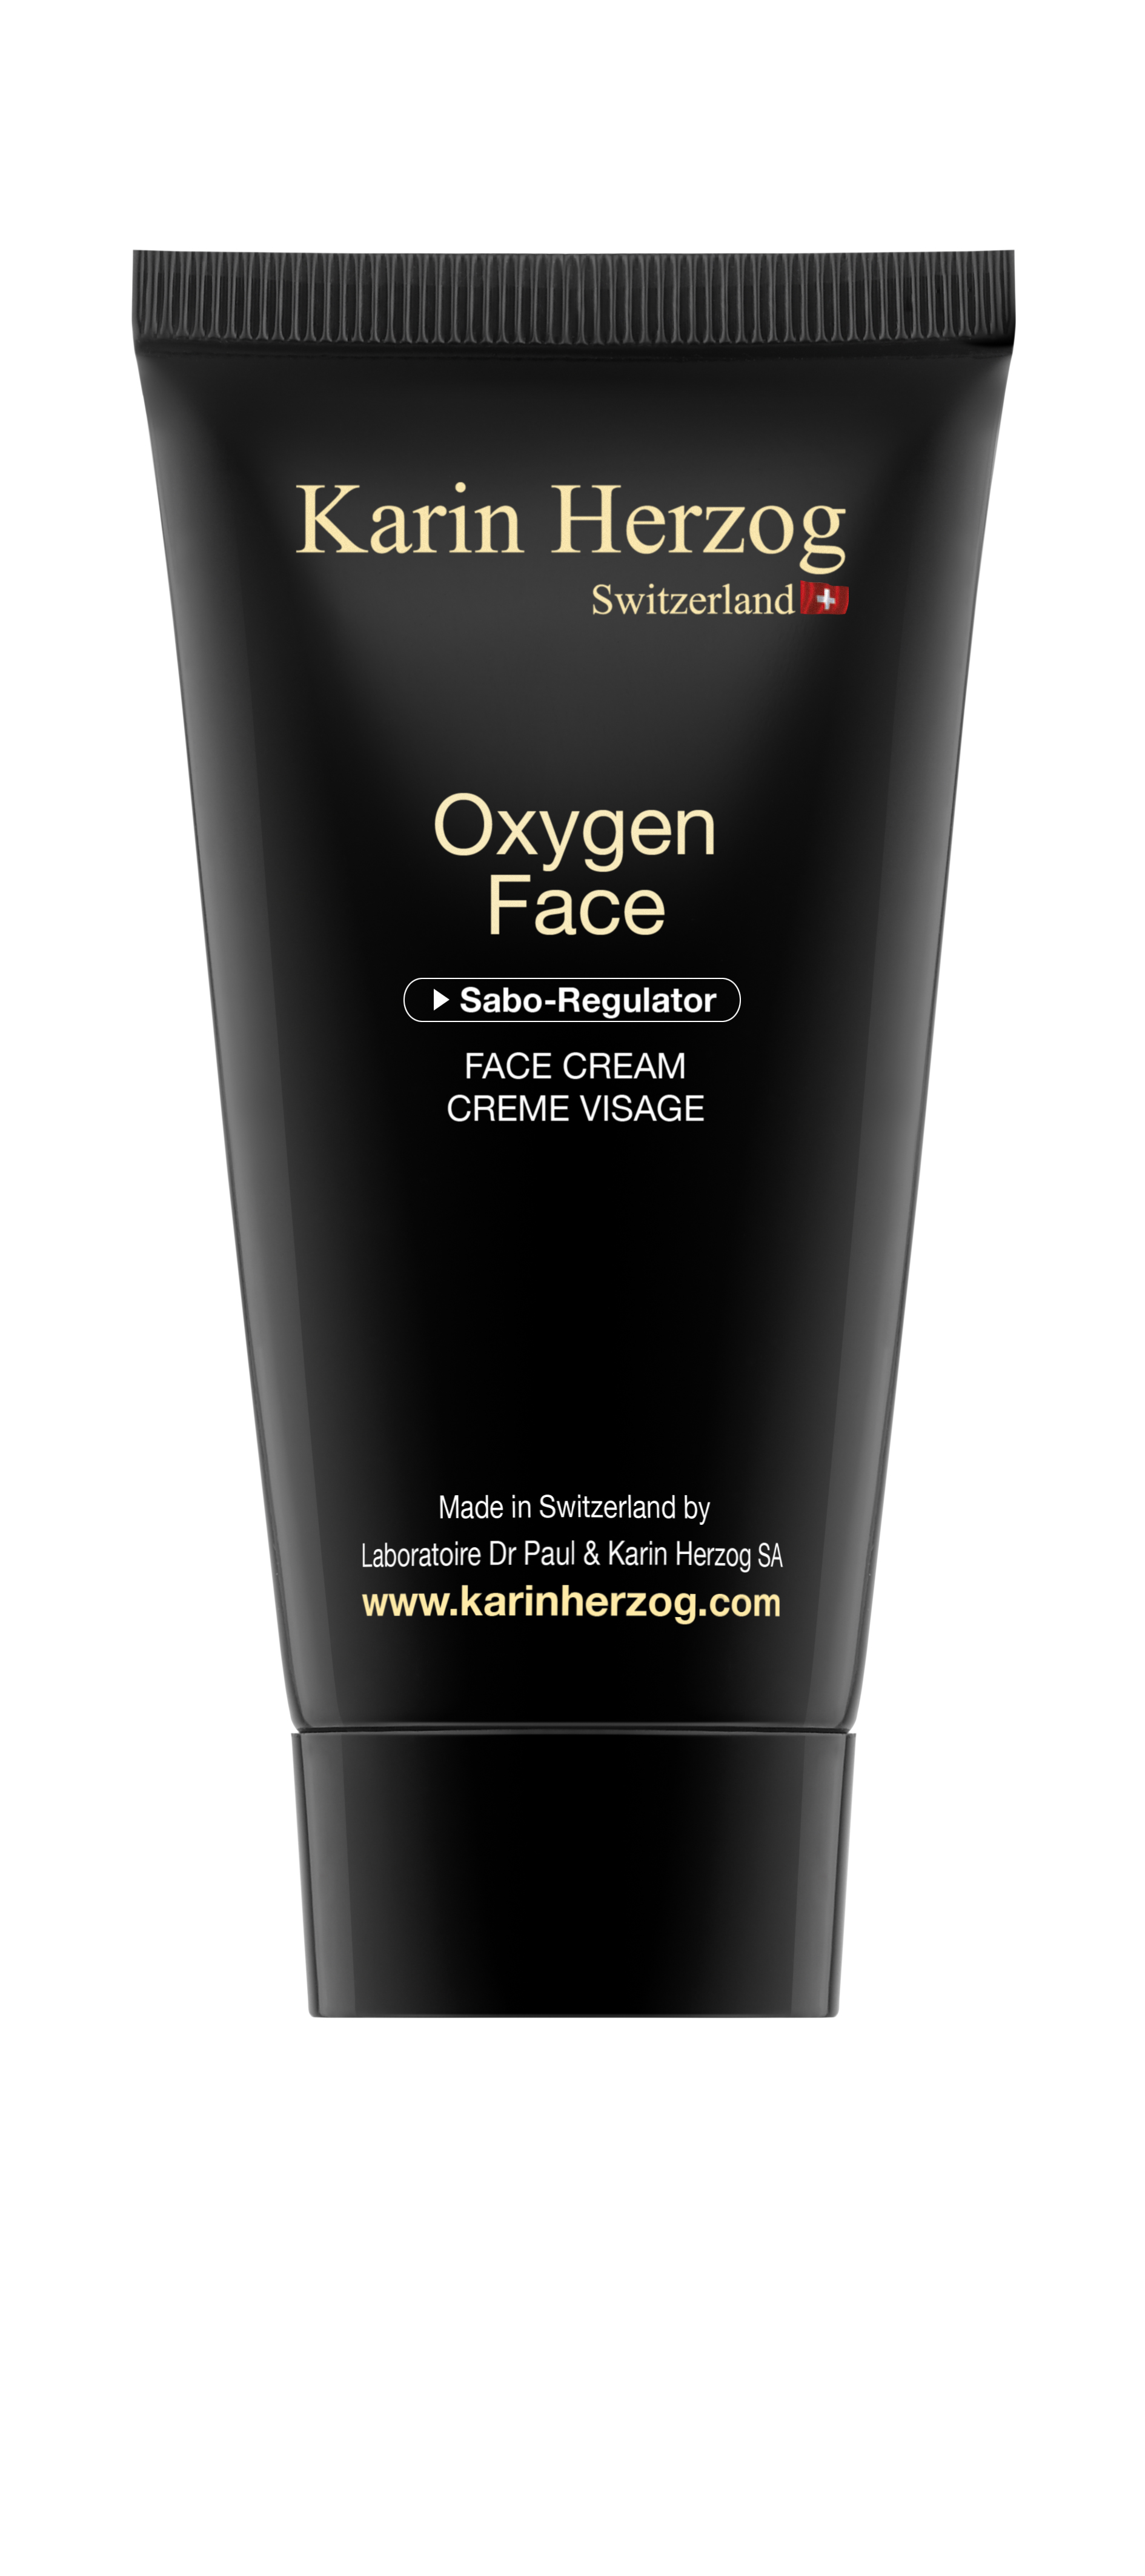 Karin Herzog OxygenFace Cream 2% 50ml